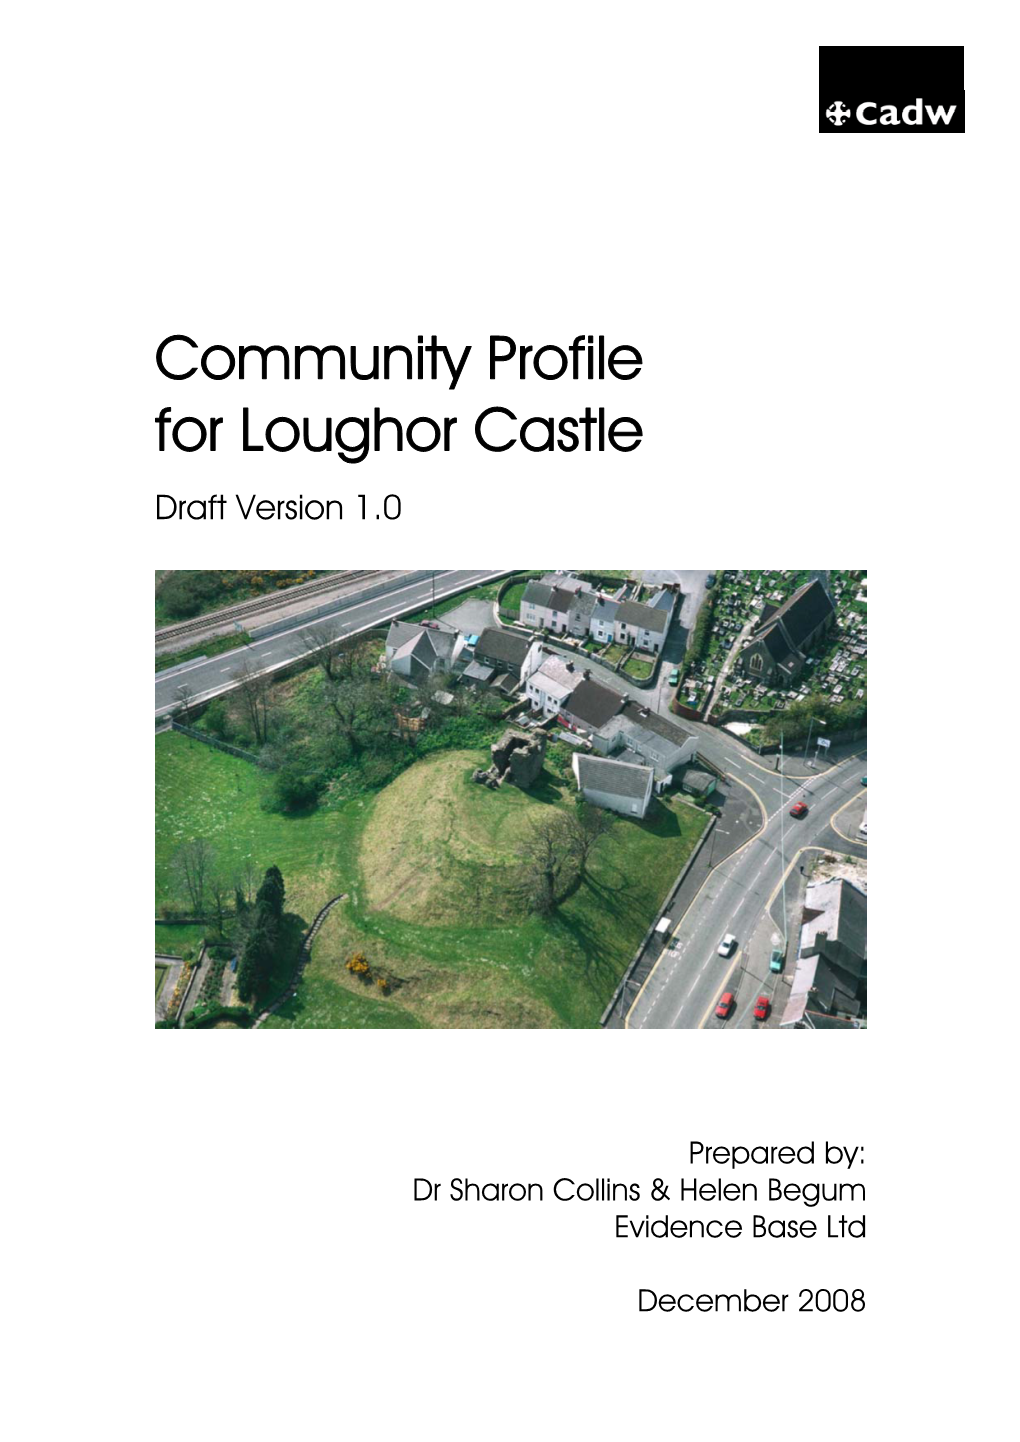 Community Profile for Loughor Castle